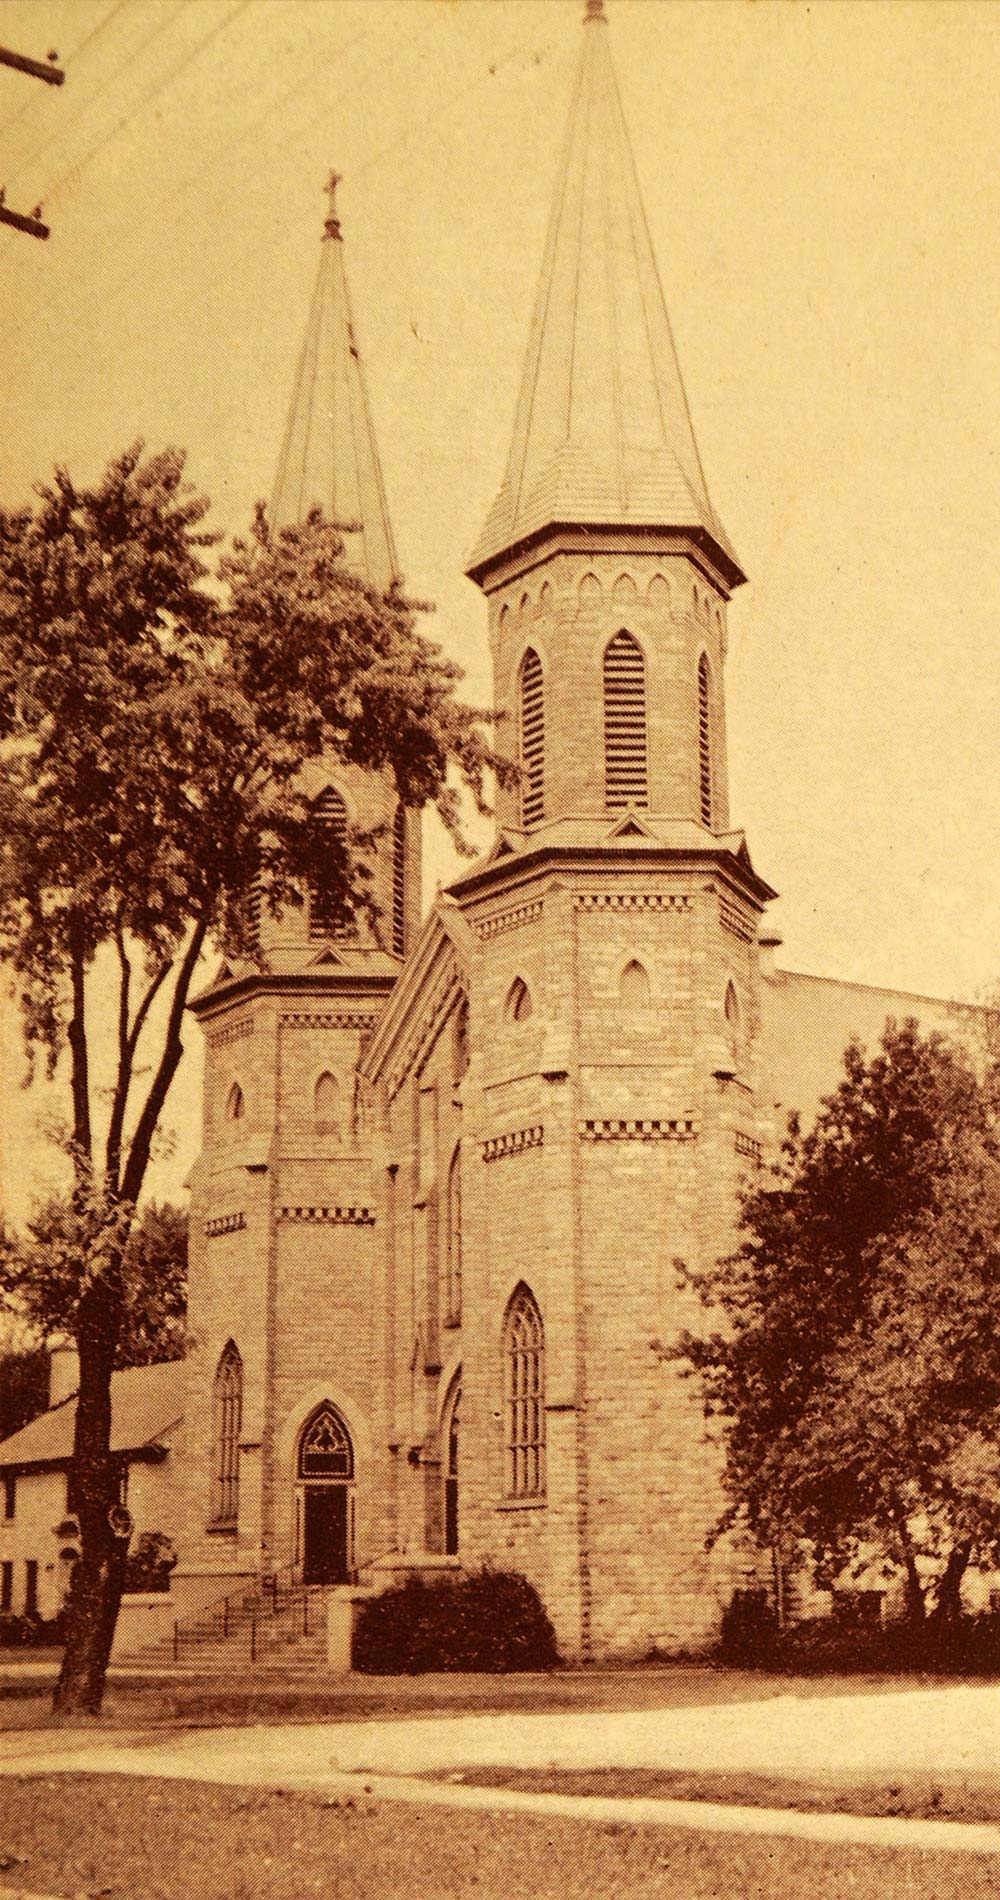 1949 Print Saint Louis Church Fond Du Lac Wisconsin - ORIGINAL HISTORIC WIS1